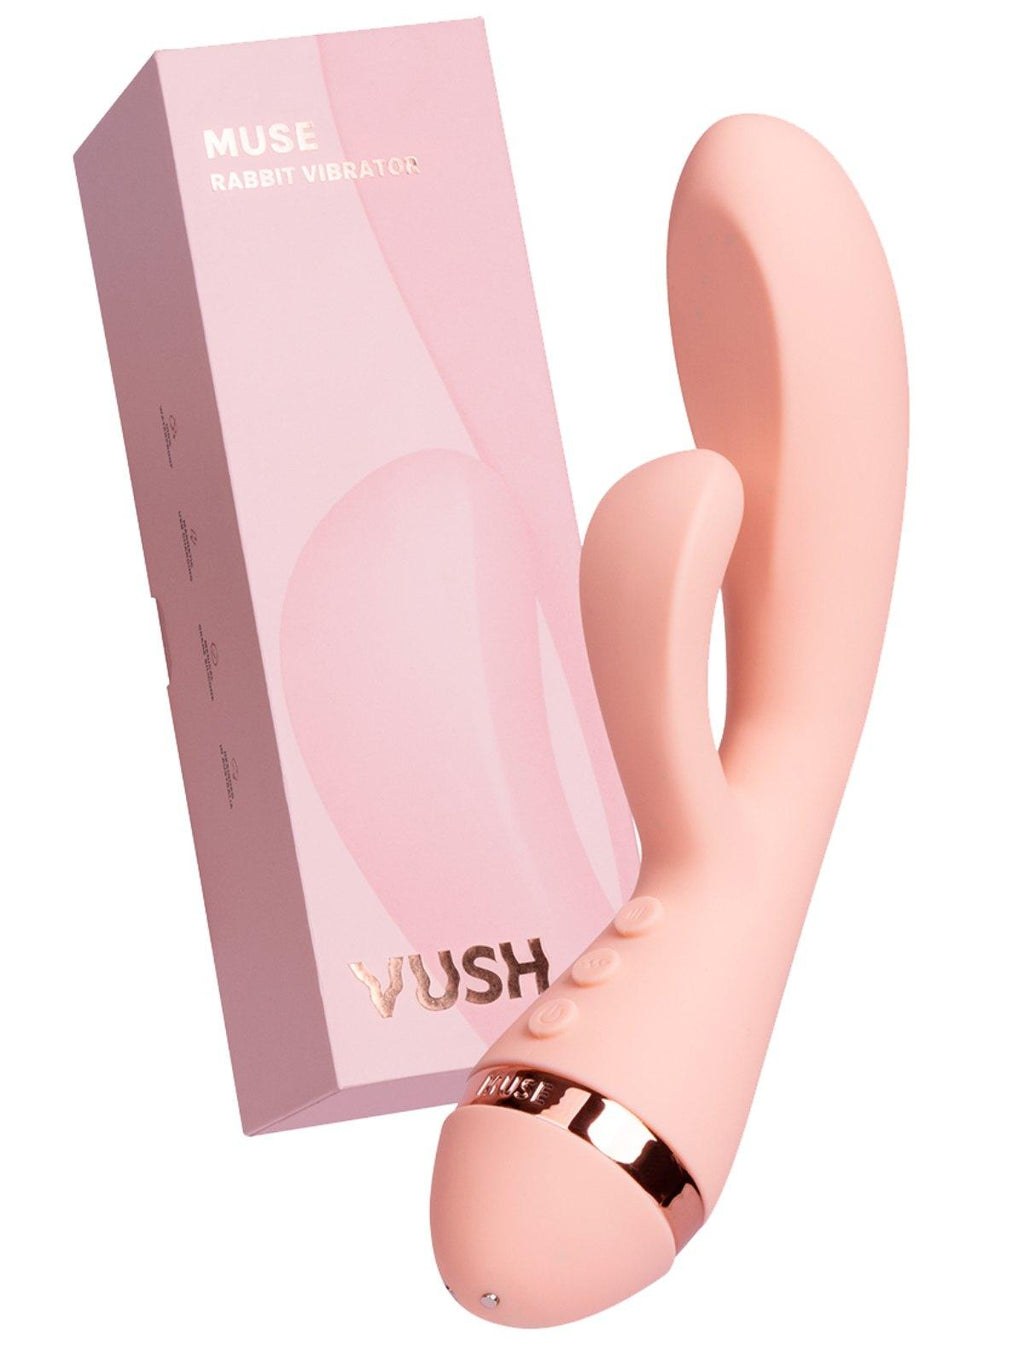 Vush Muse Rabbit Vibrator - Passionzone Adult Store